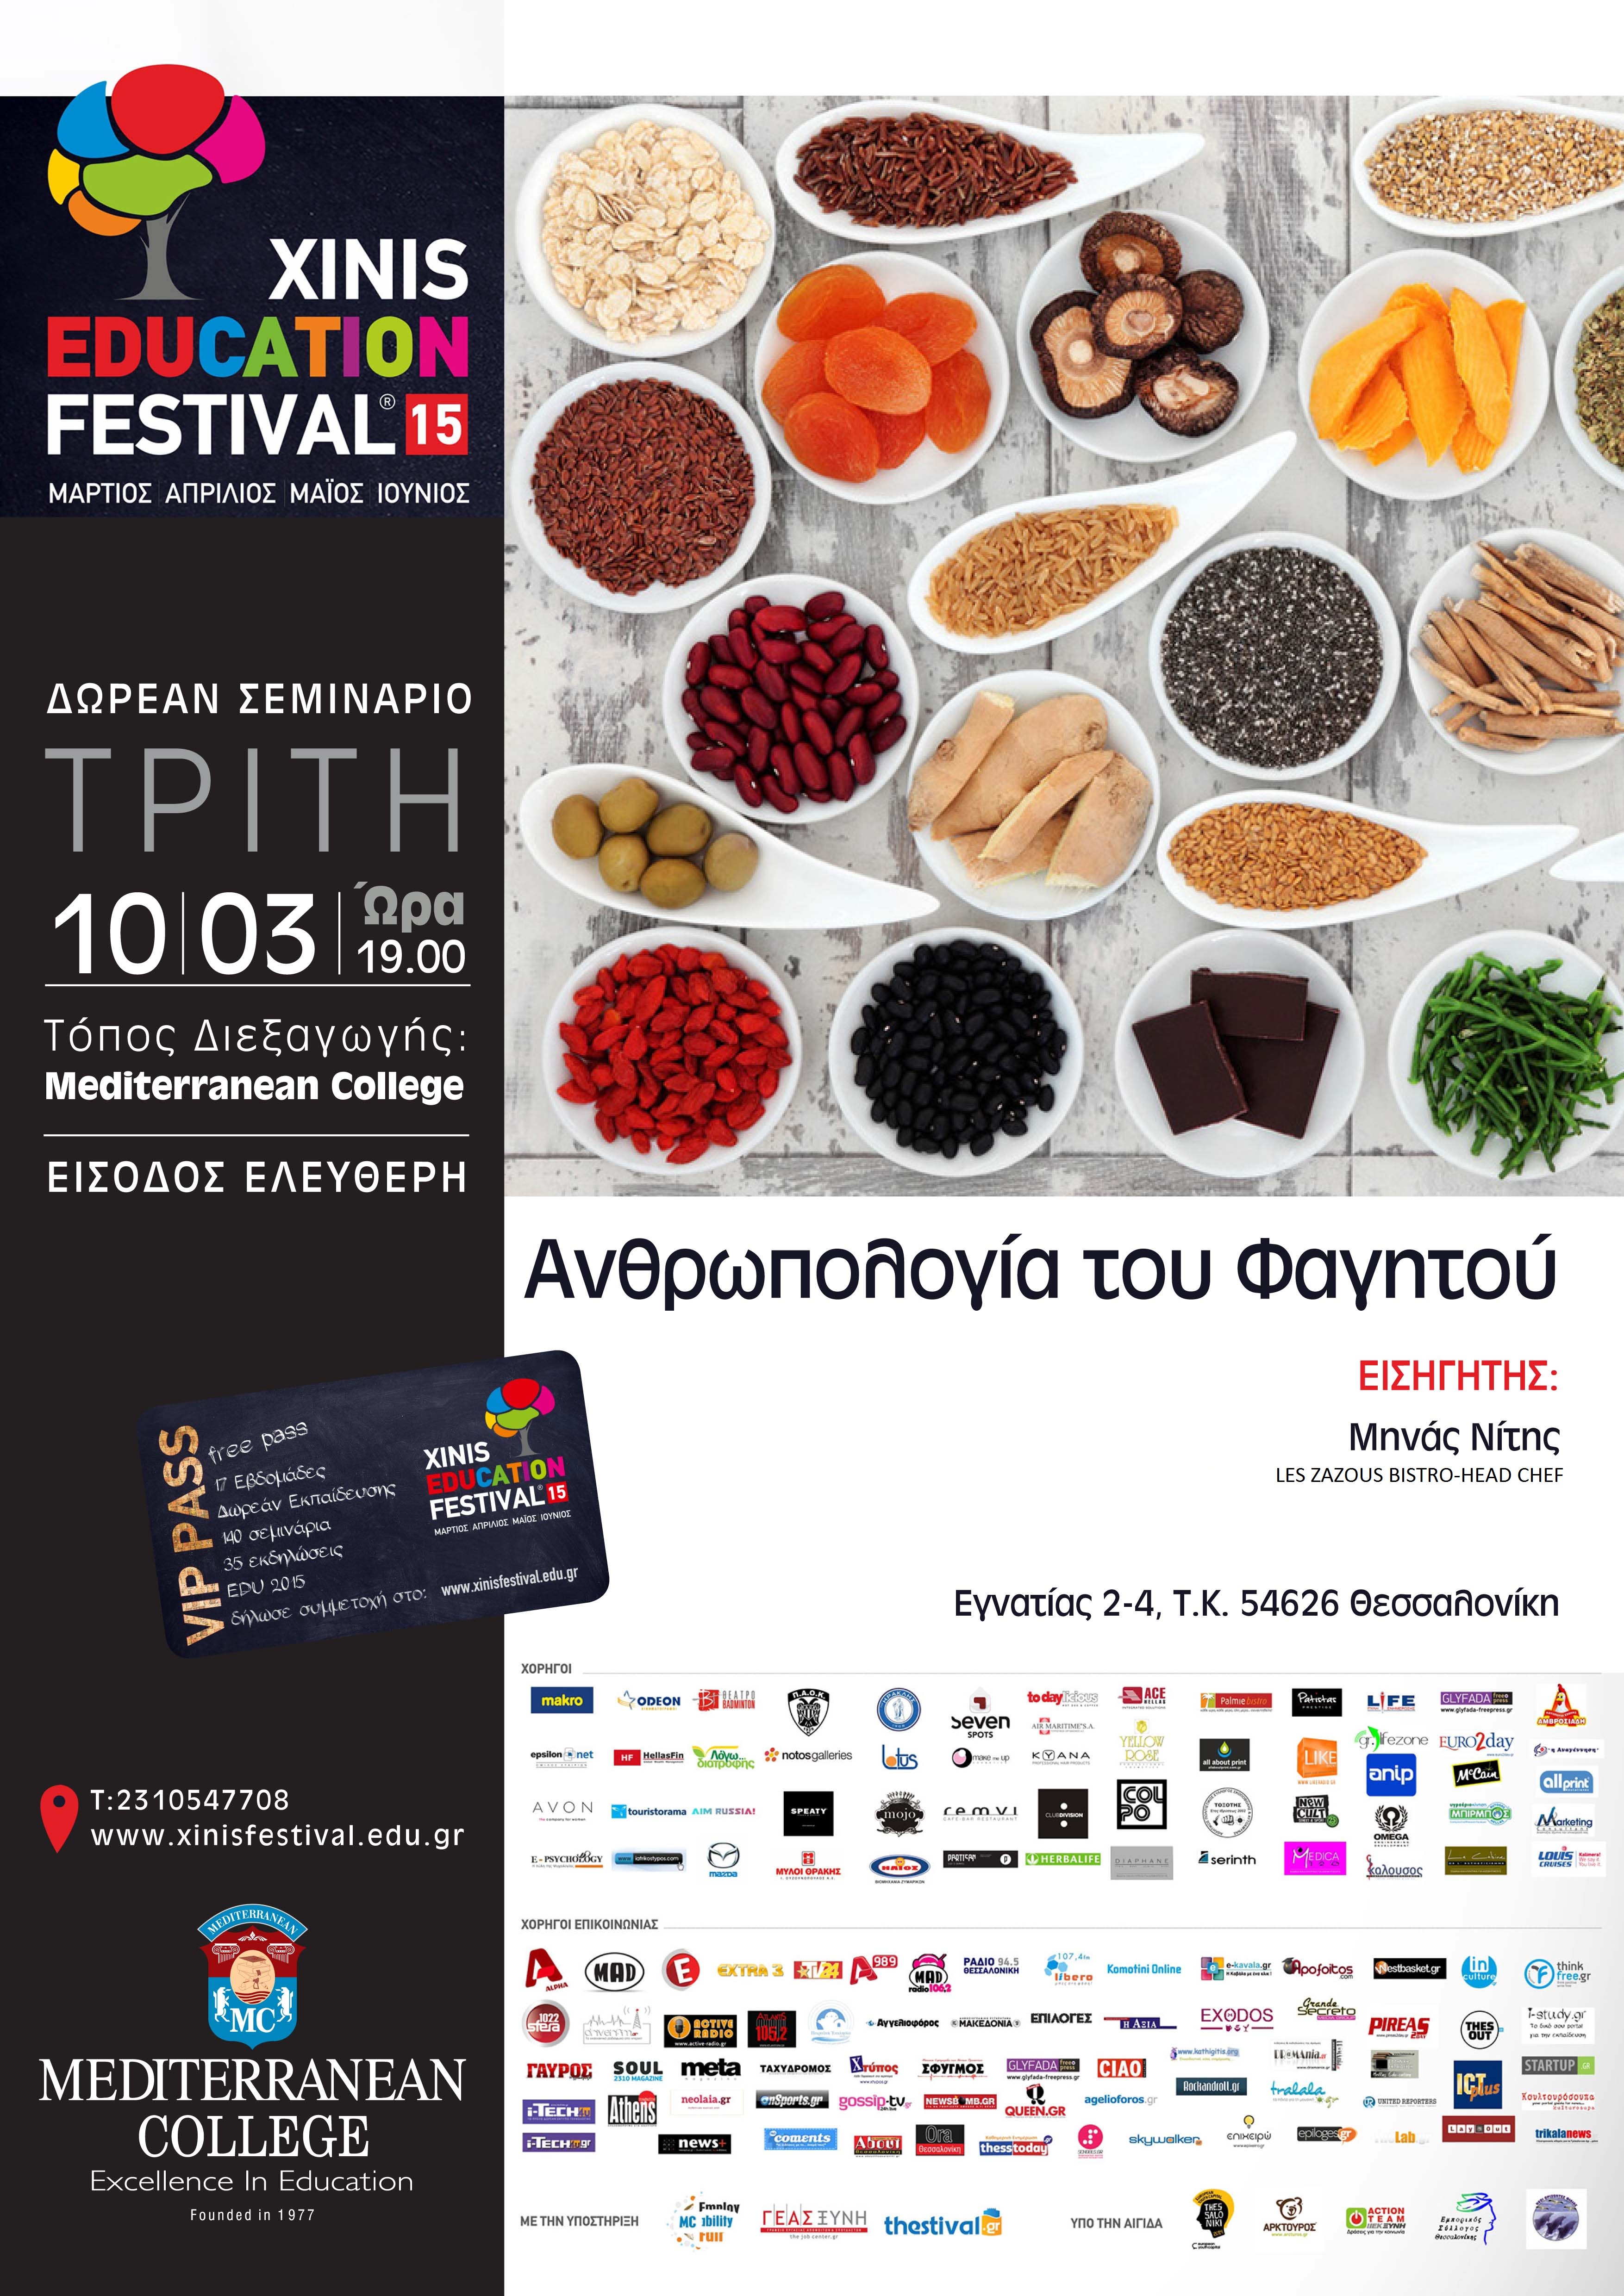 Xinis Education Festival 2015 – Σεμινάριο Επισιτισμού: «Η ανθρωπολογία του φαγητού»